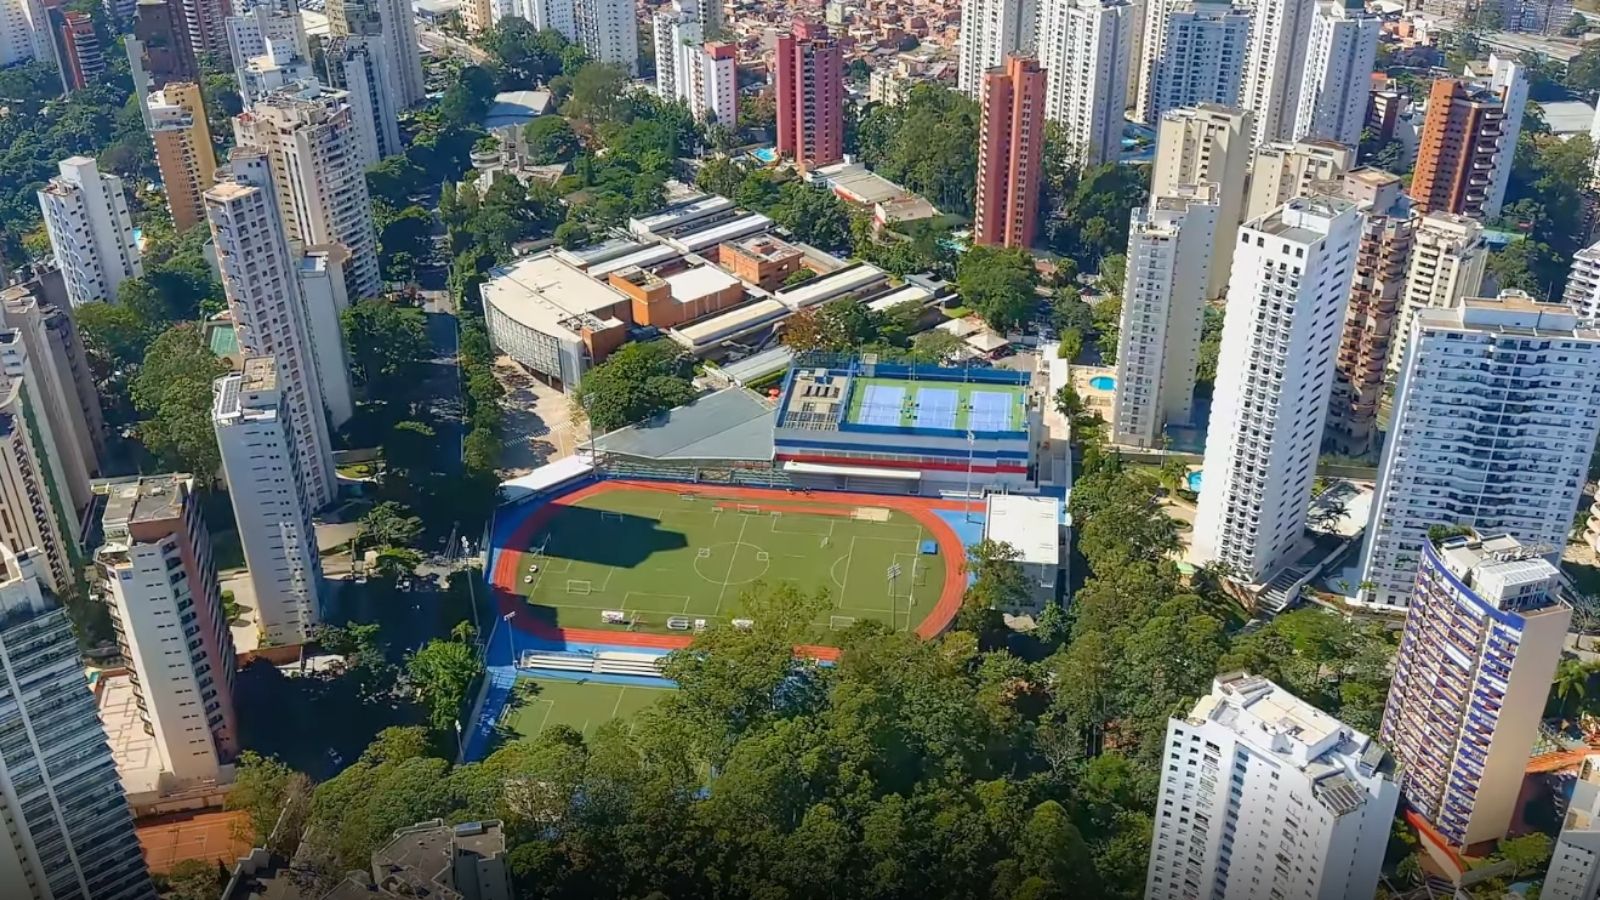 Graded (The American School of São Paulo)